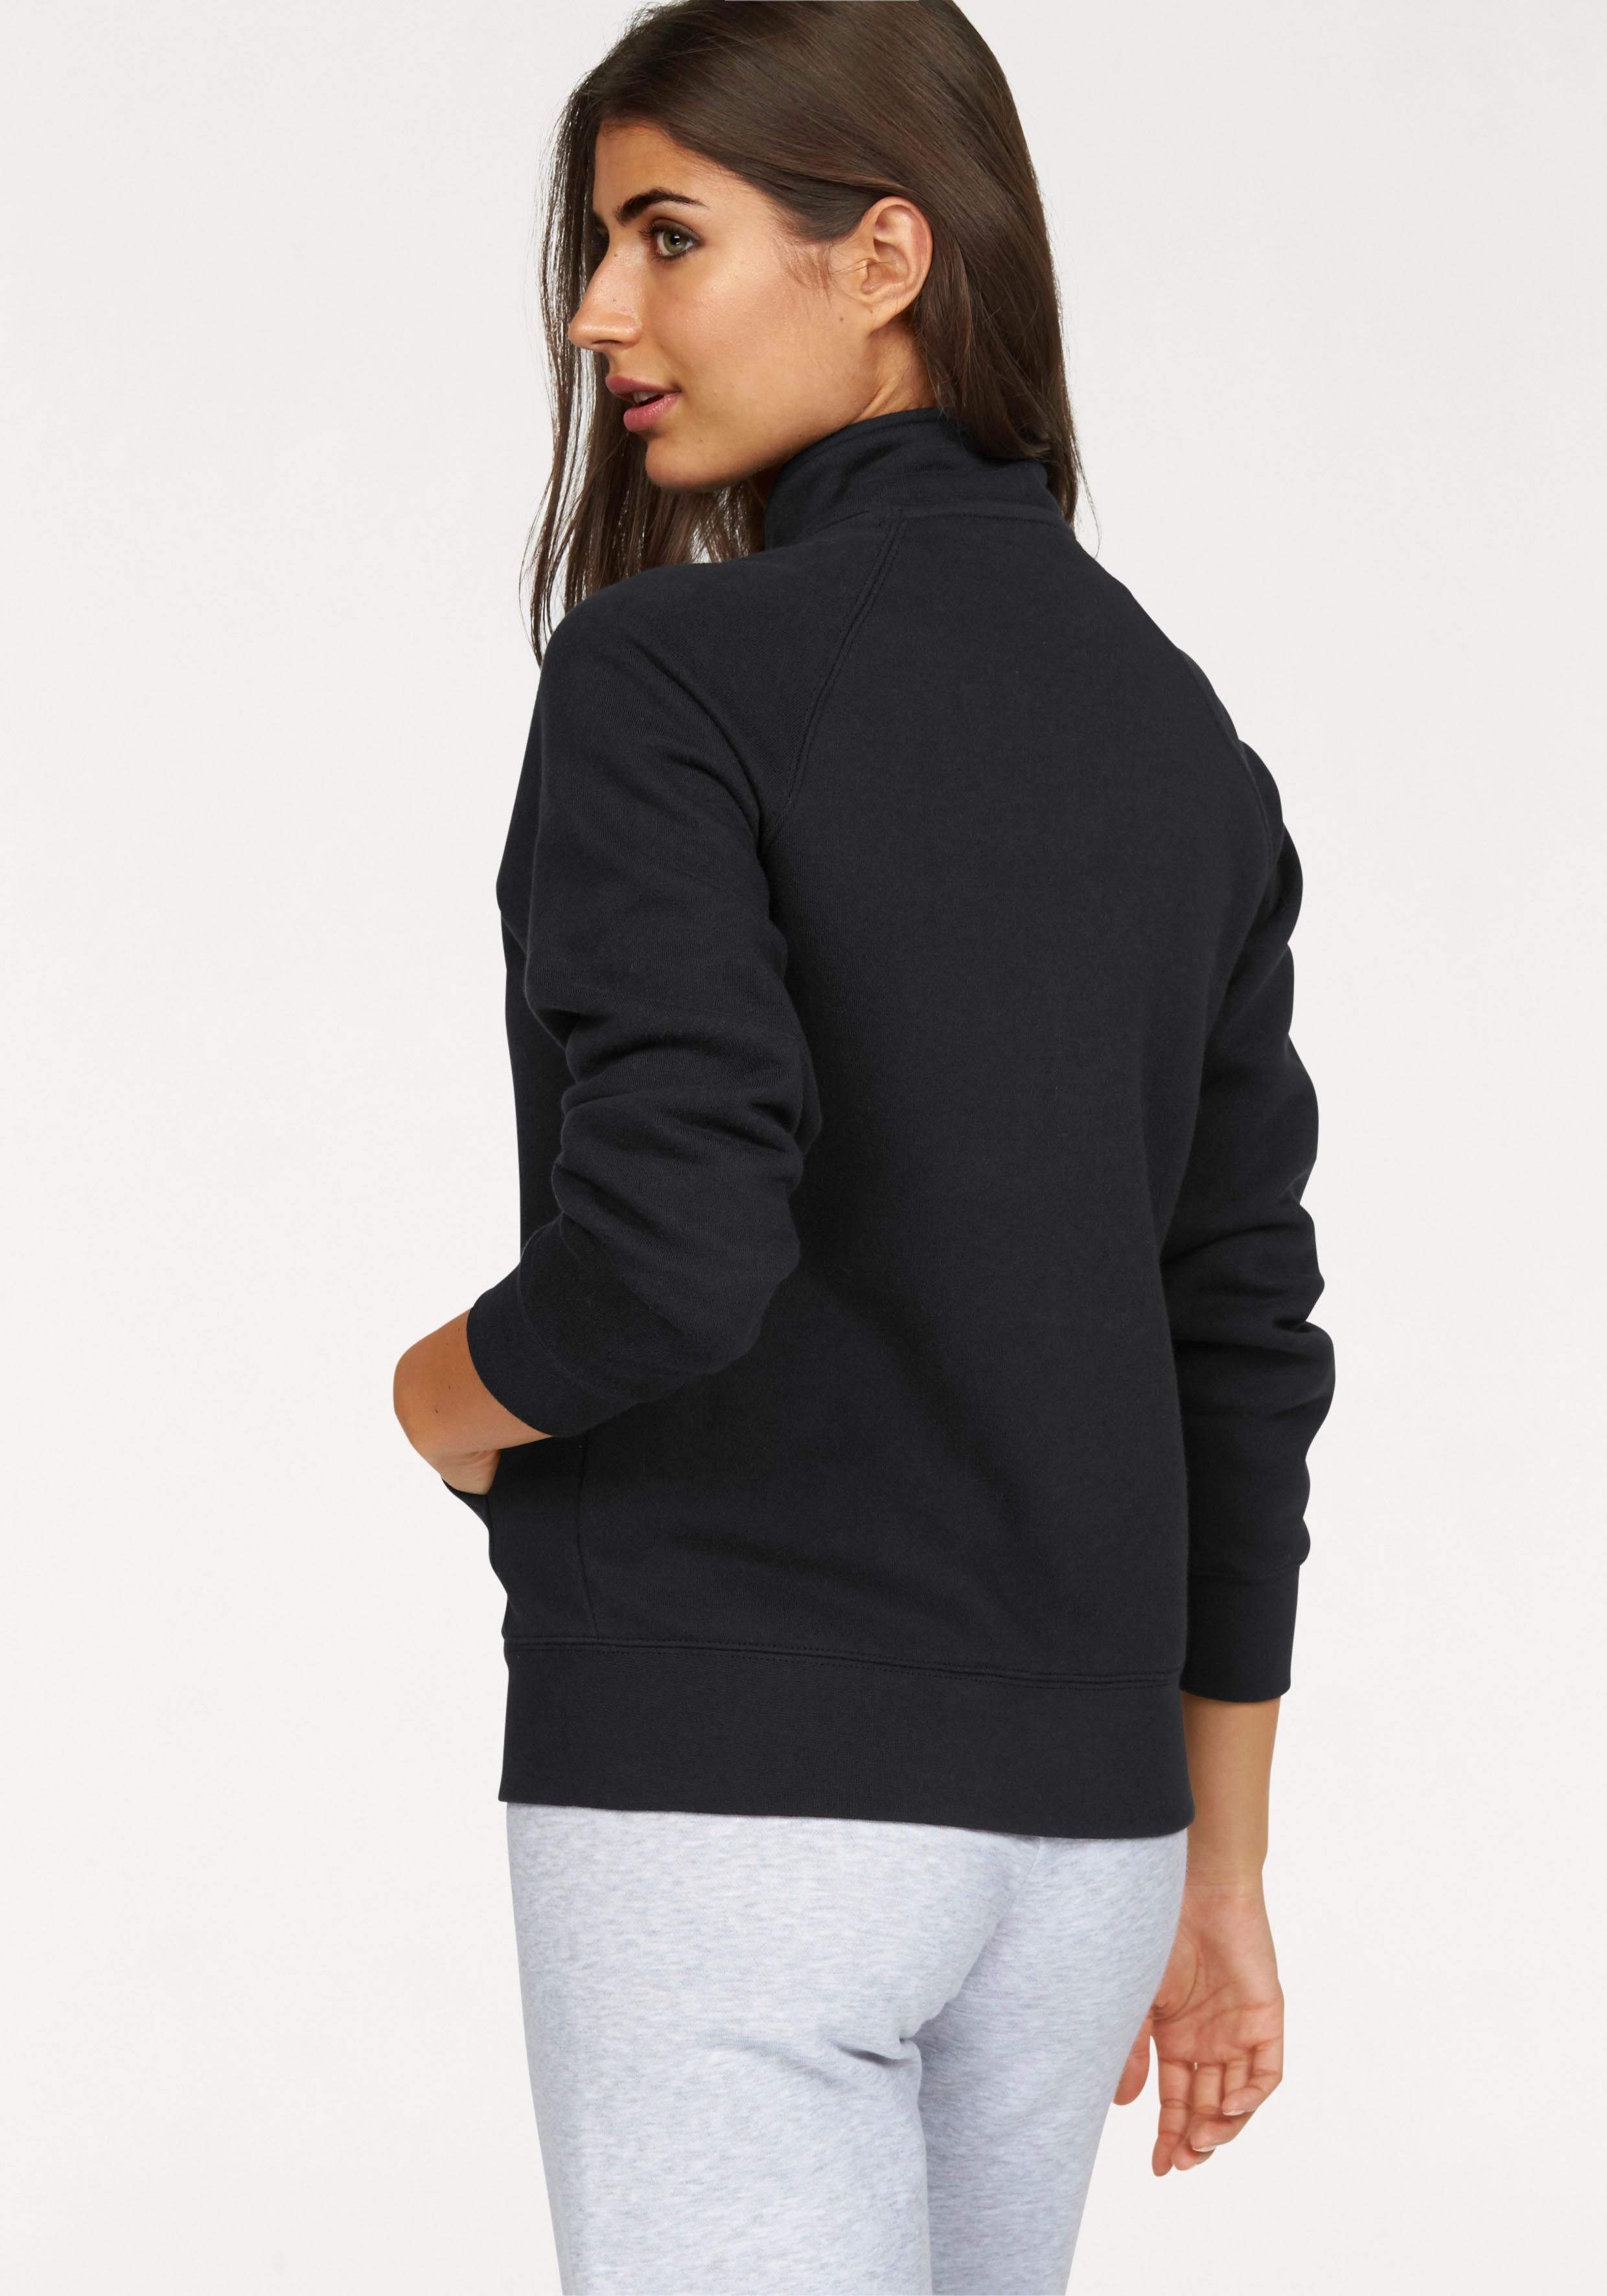 Jacket Fruit Lady-Fit of schwarz Premium Sweat Loom the Sweatshirt